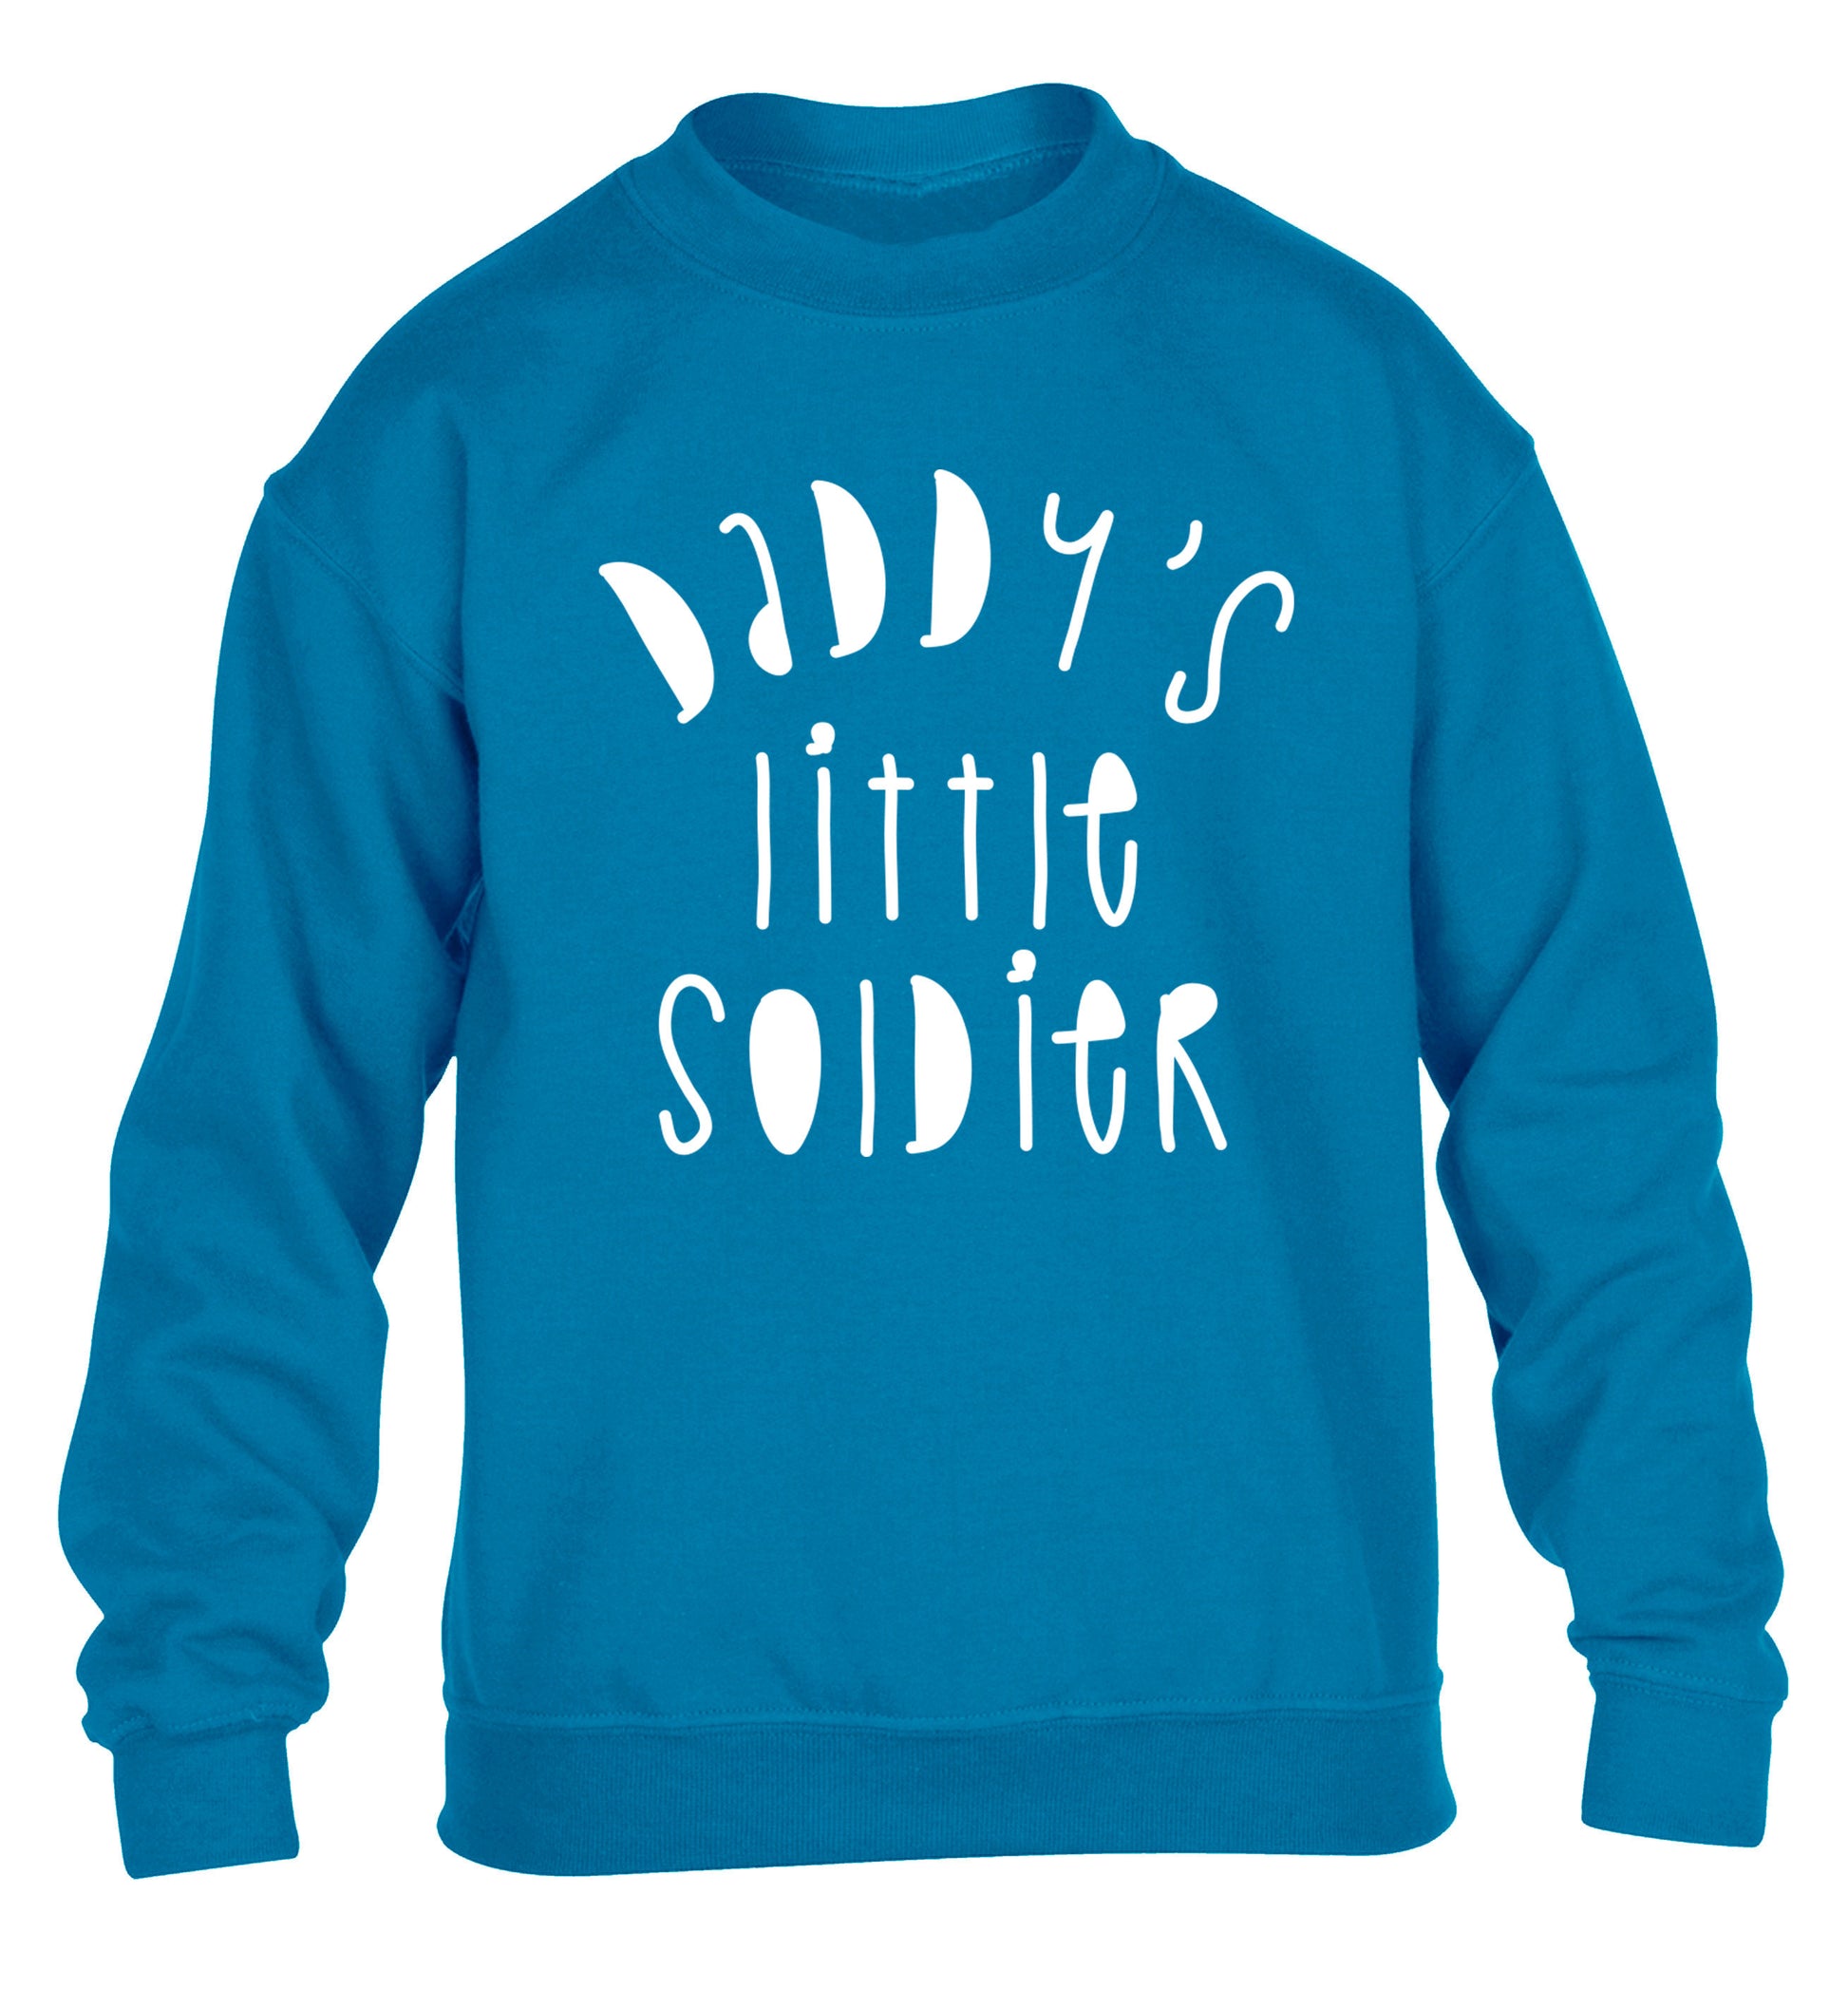 Daddy's little soldier children's blue sweater 12-14 Years